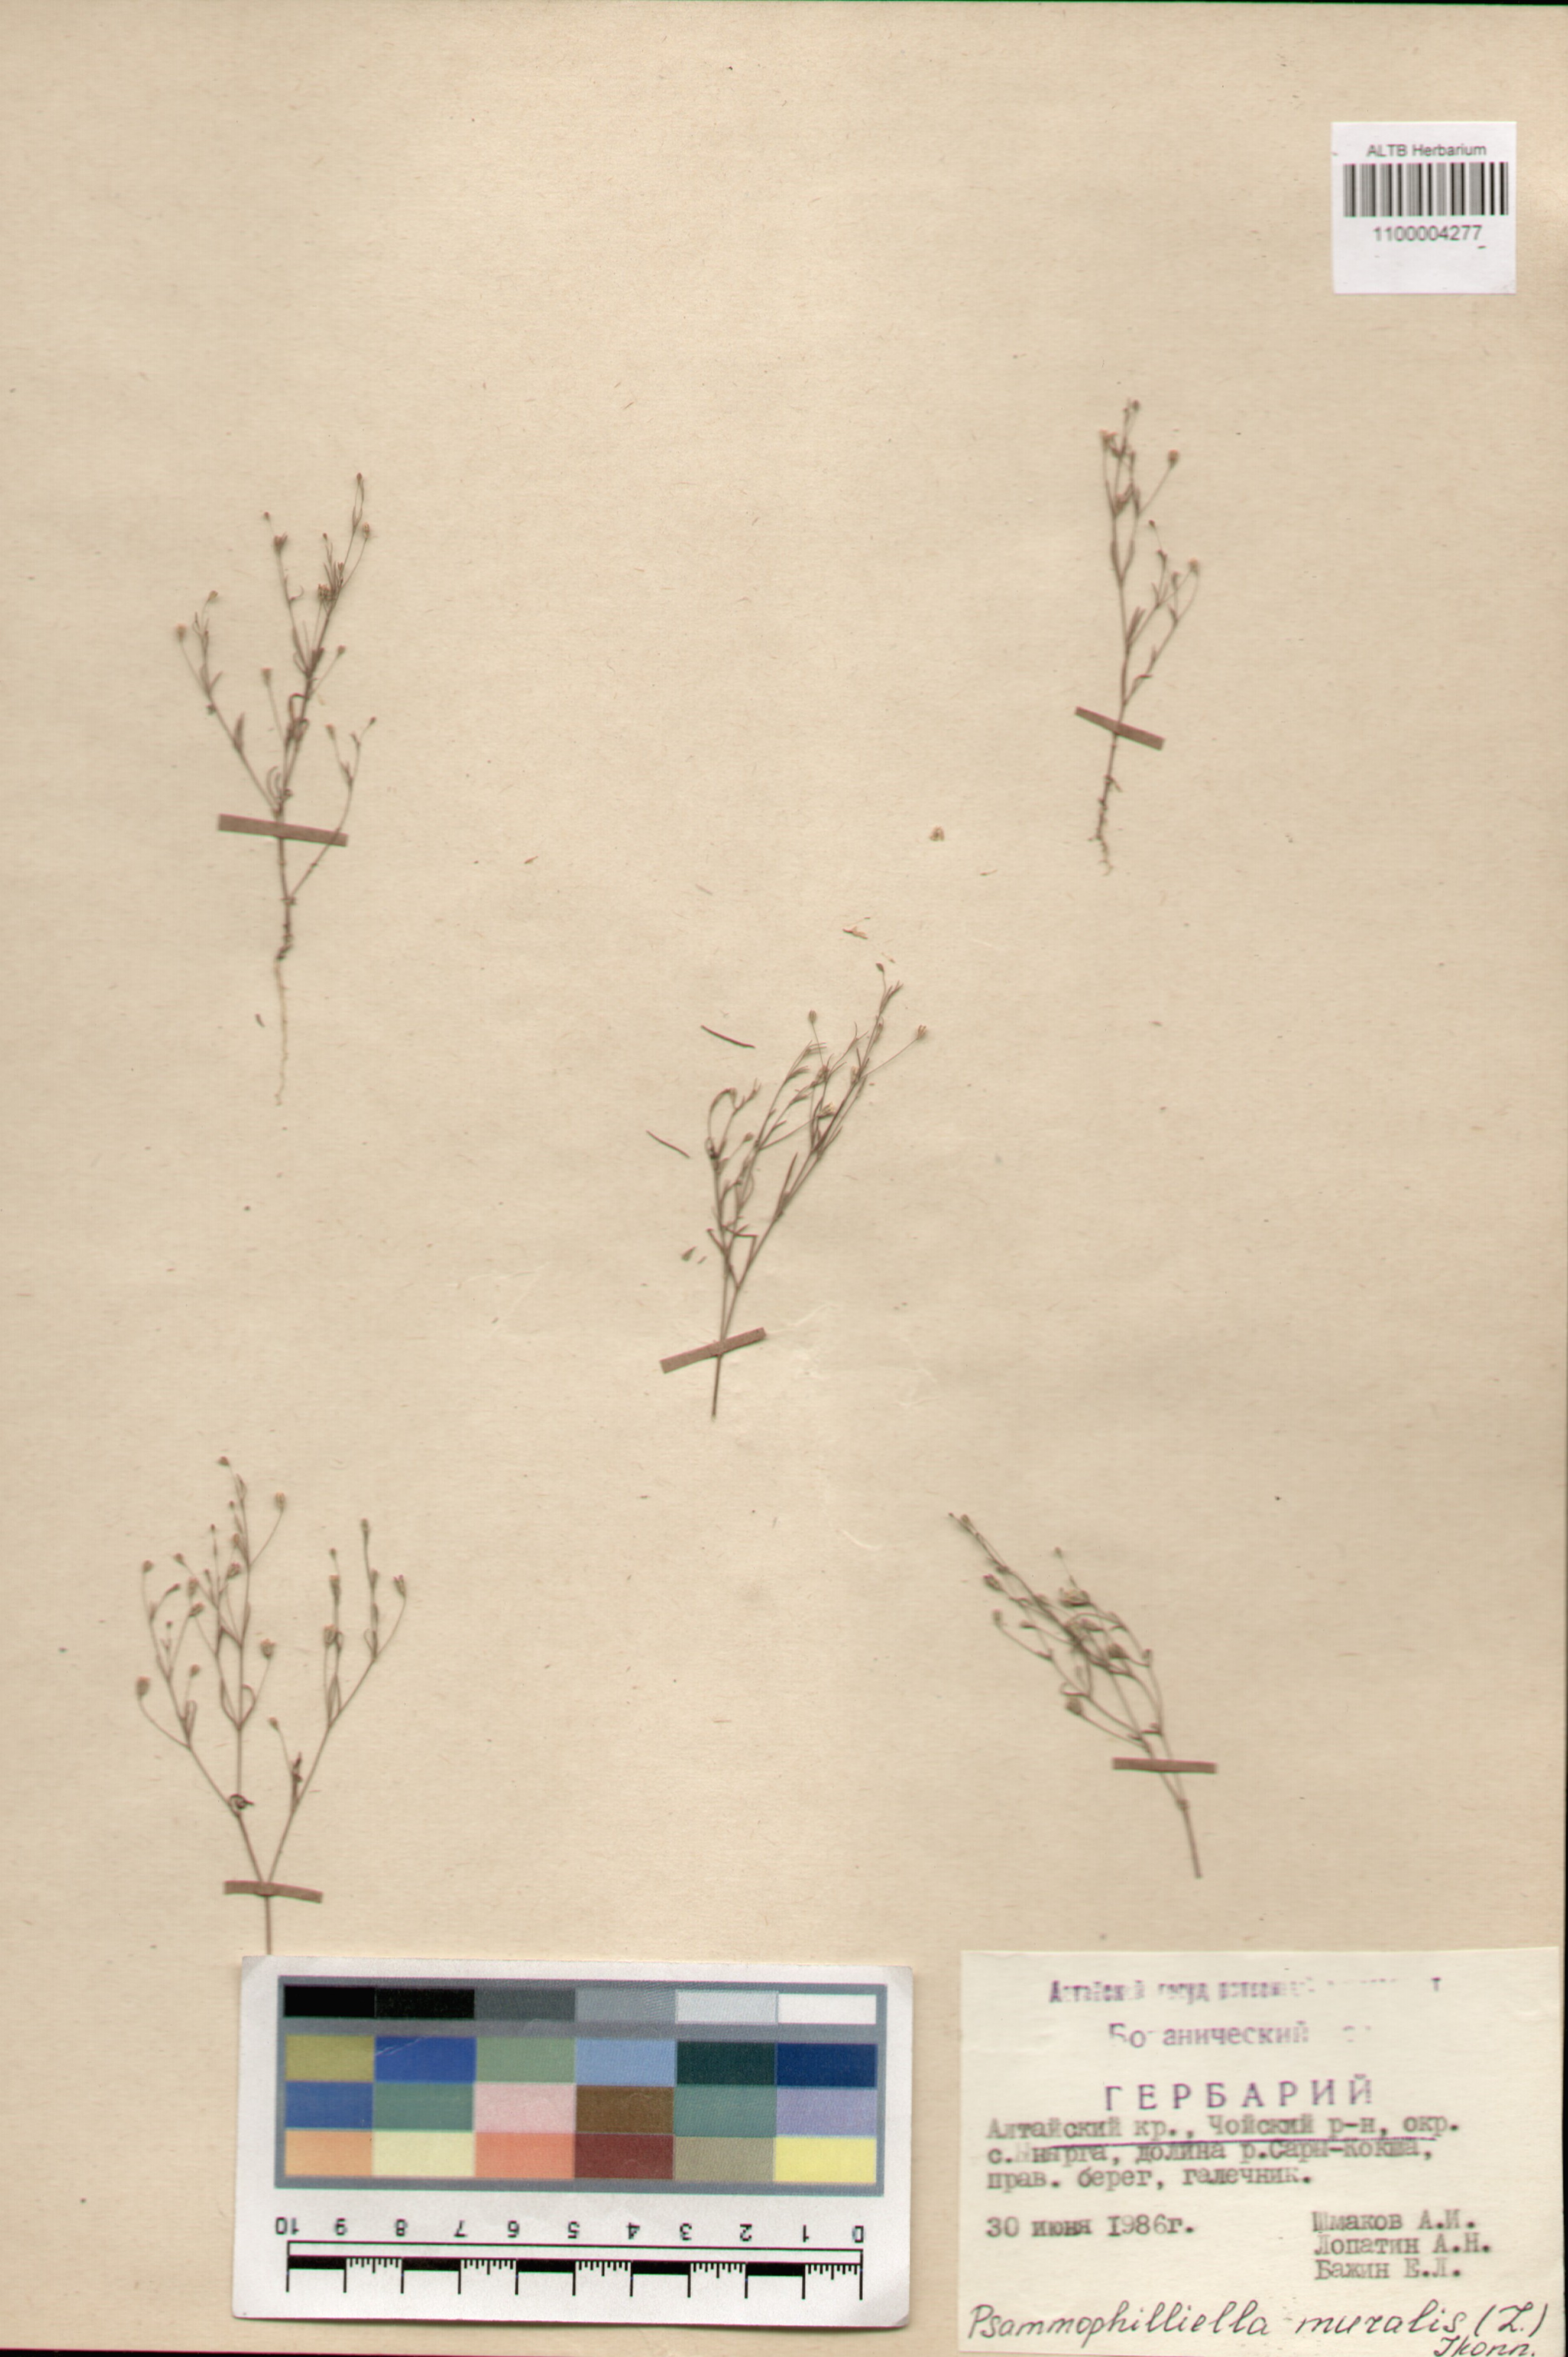 Caryophyllaceae,Psammophiliella muralis (L.) Ikonn